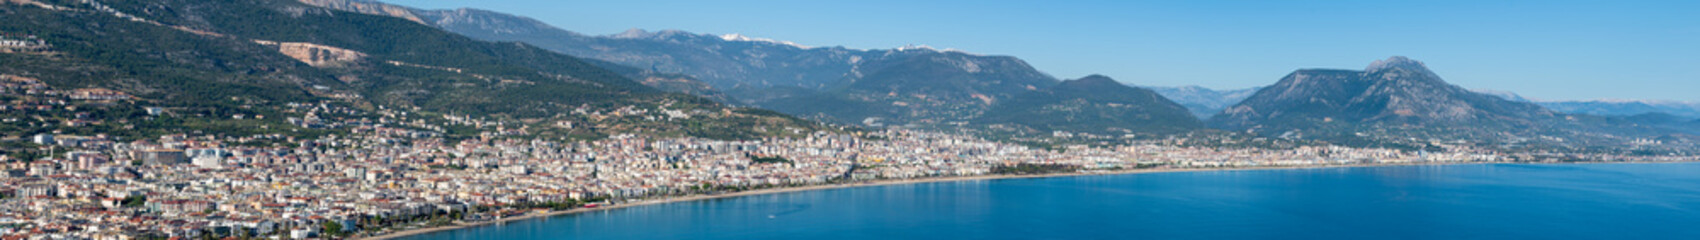 Panoramic view of Alanya city in Turkey